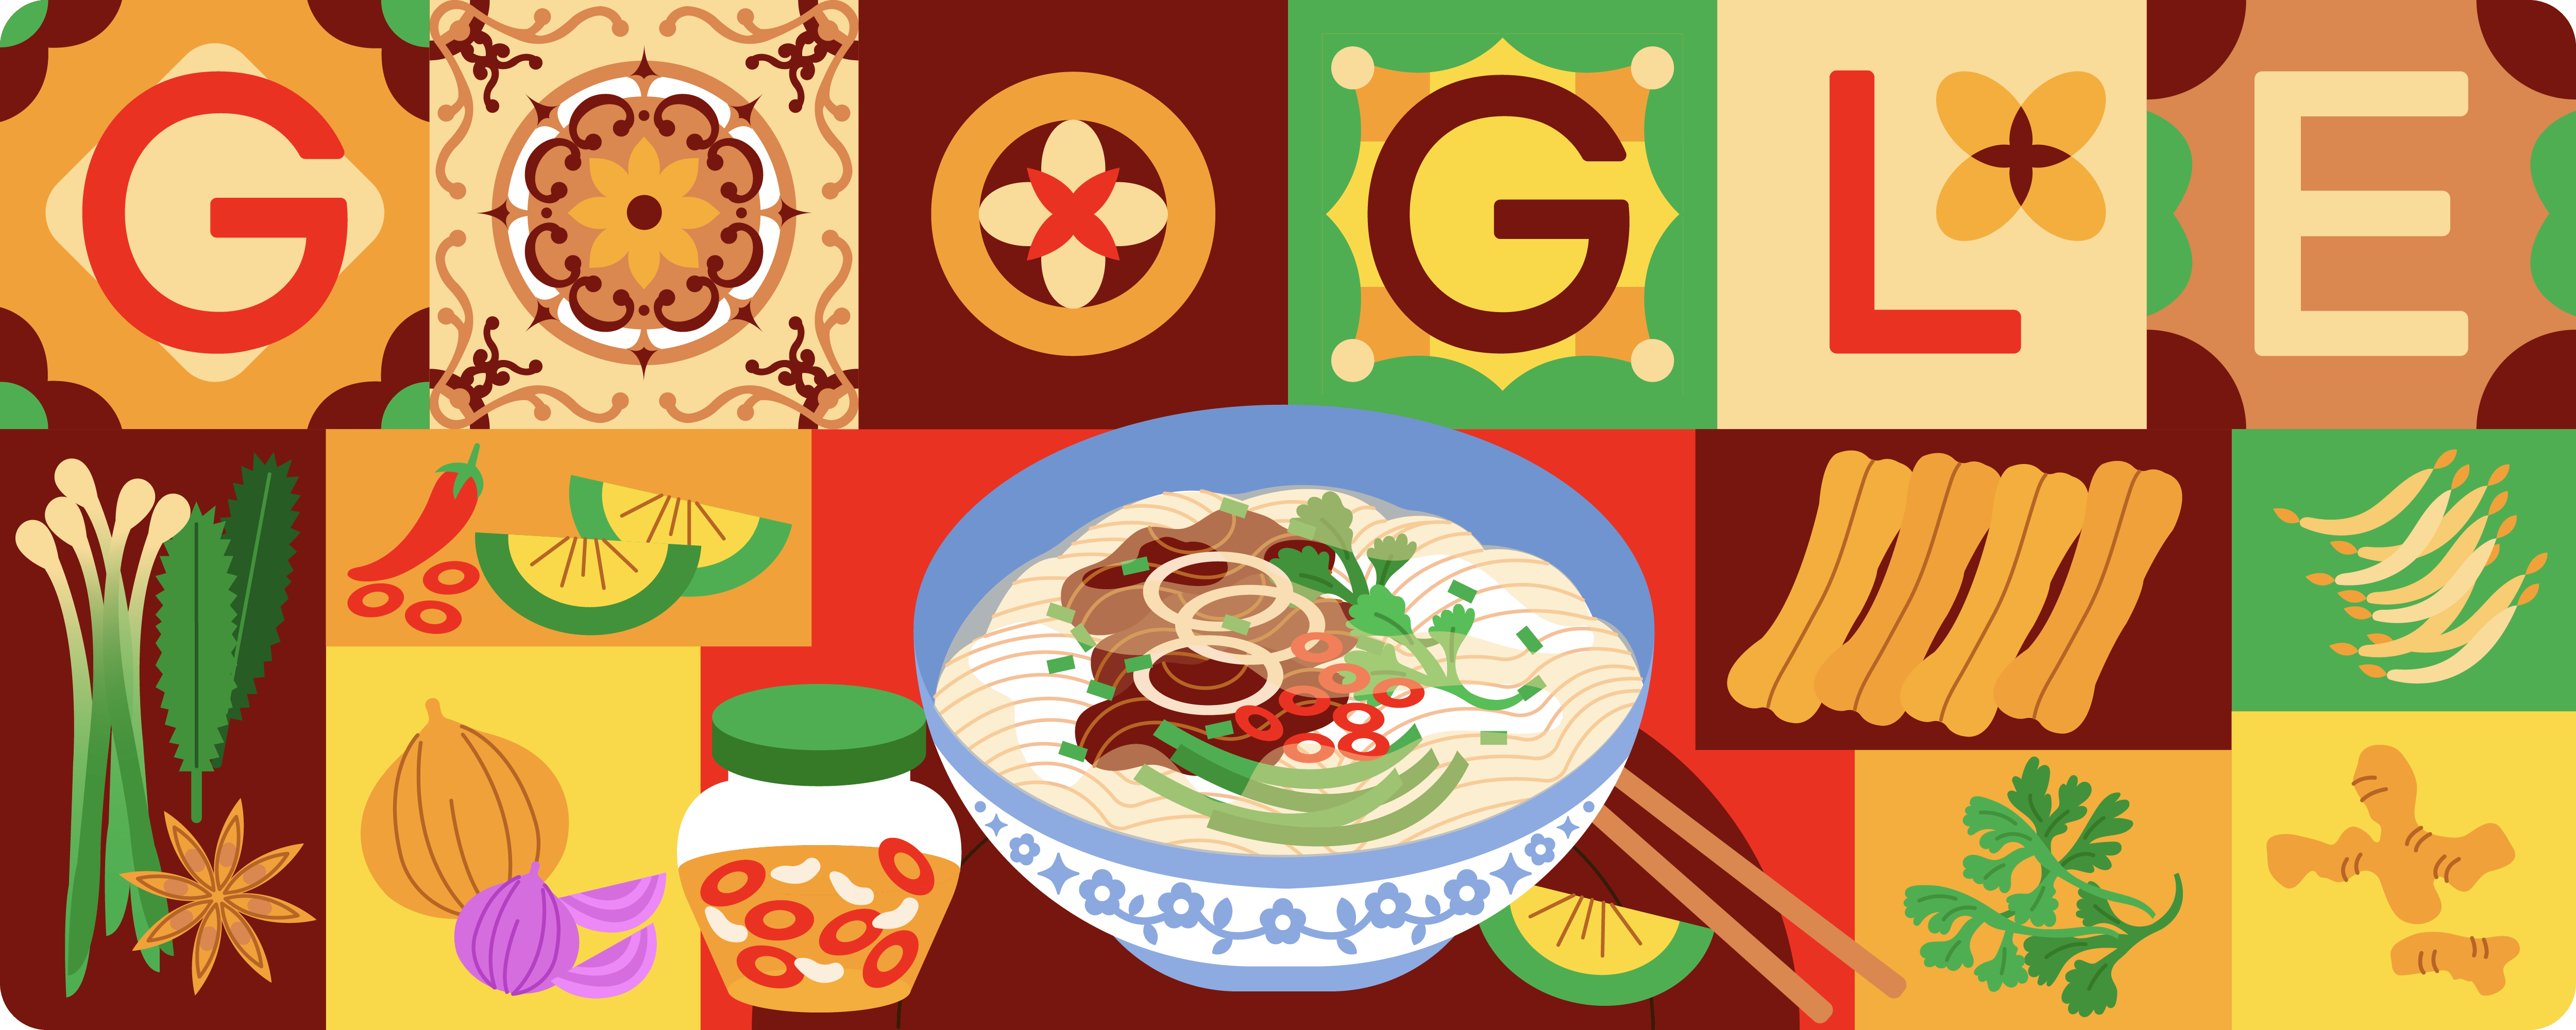 Google Doodle celebrates Vietnam's 